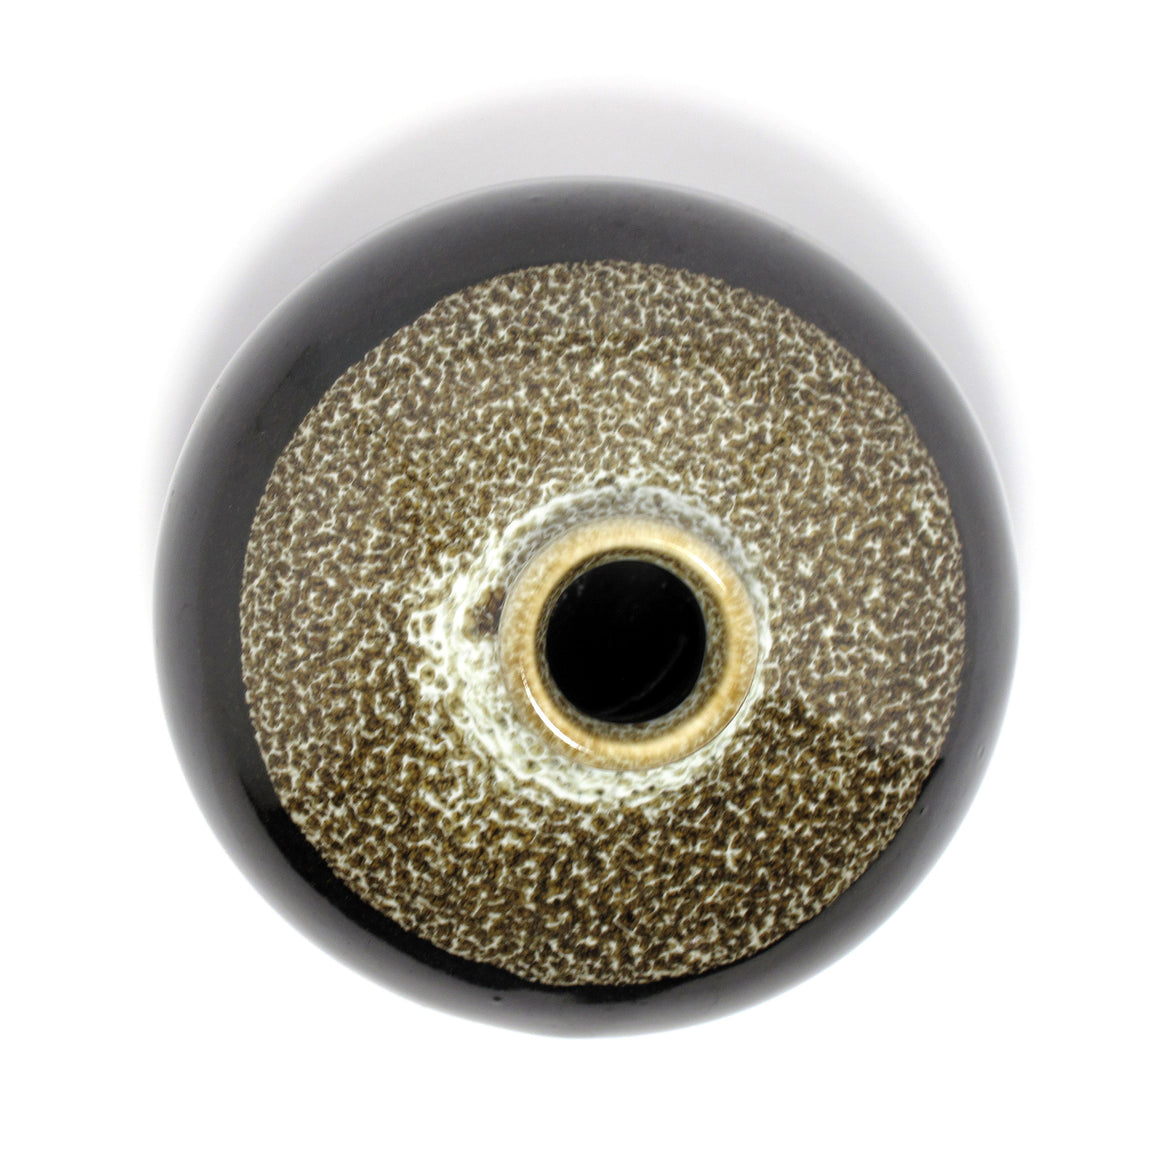 Celadon Ceramic Vase, 4" High, Brown Speckled - TropicaZona